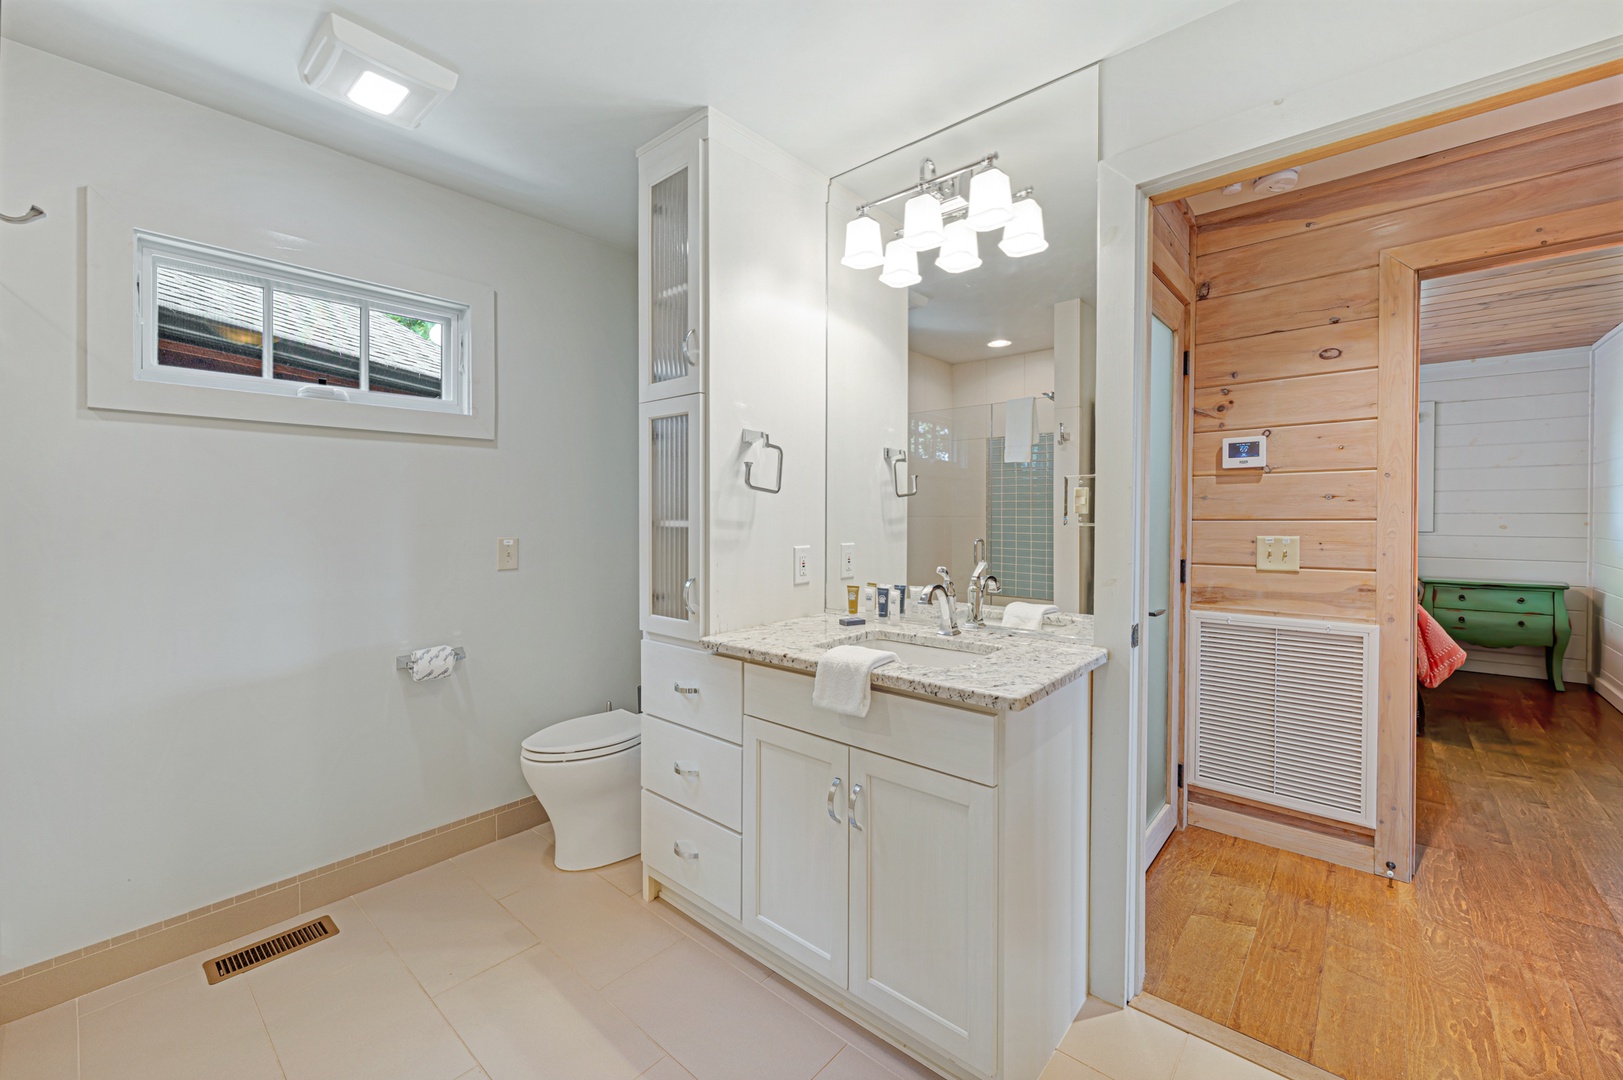 Kricket's Overlook- Entry level bathroom with vanity sink, mirror and toilet